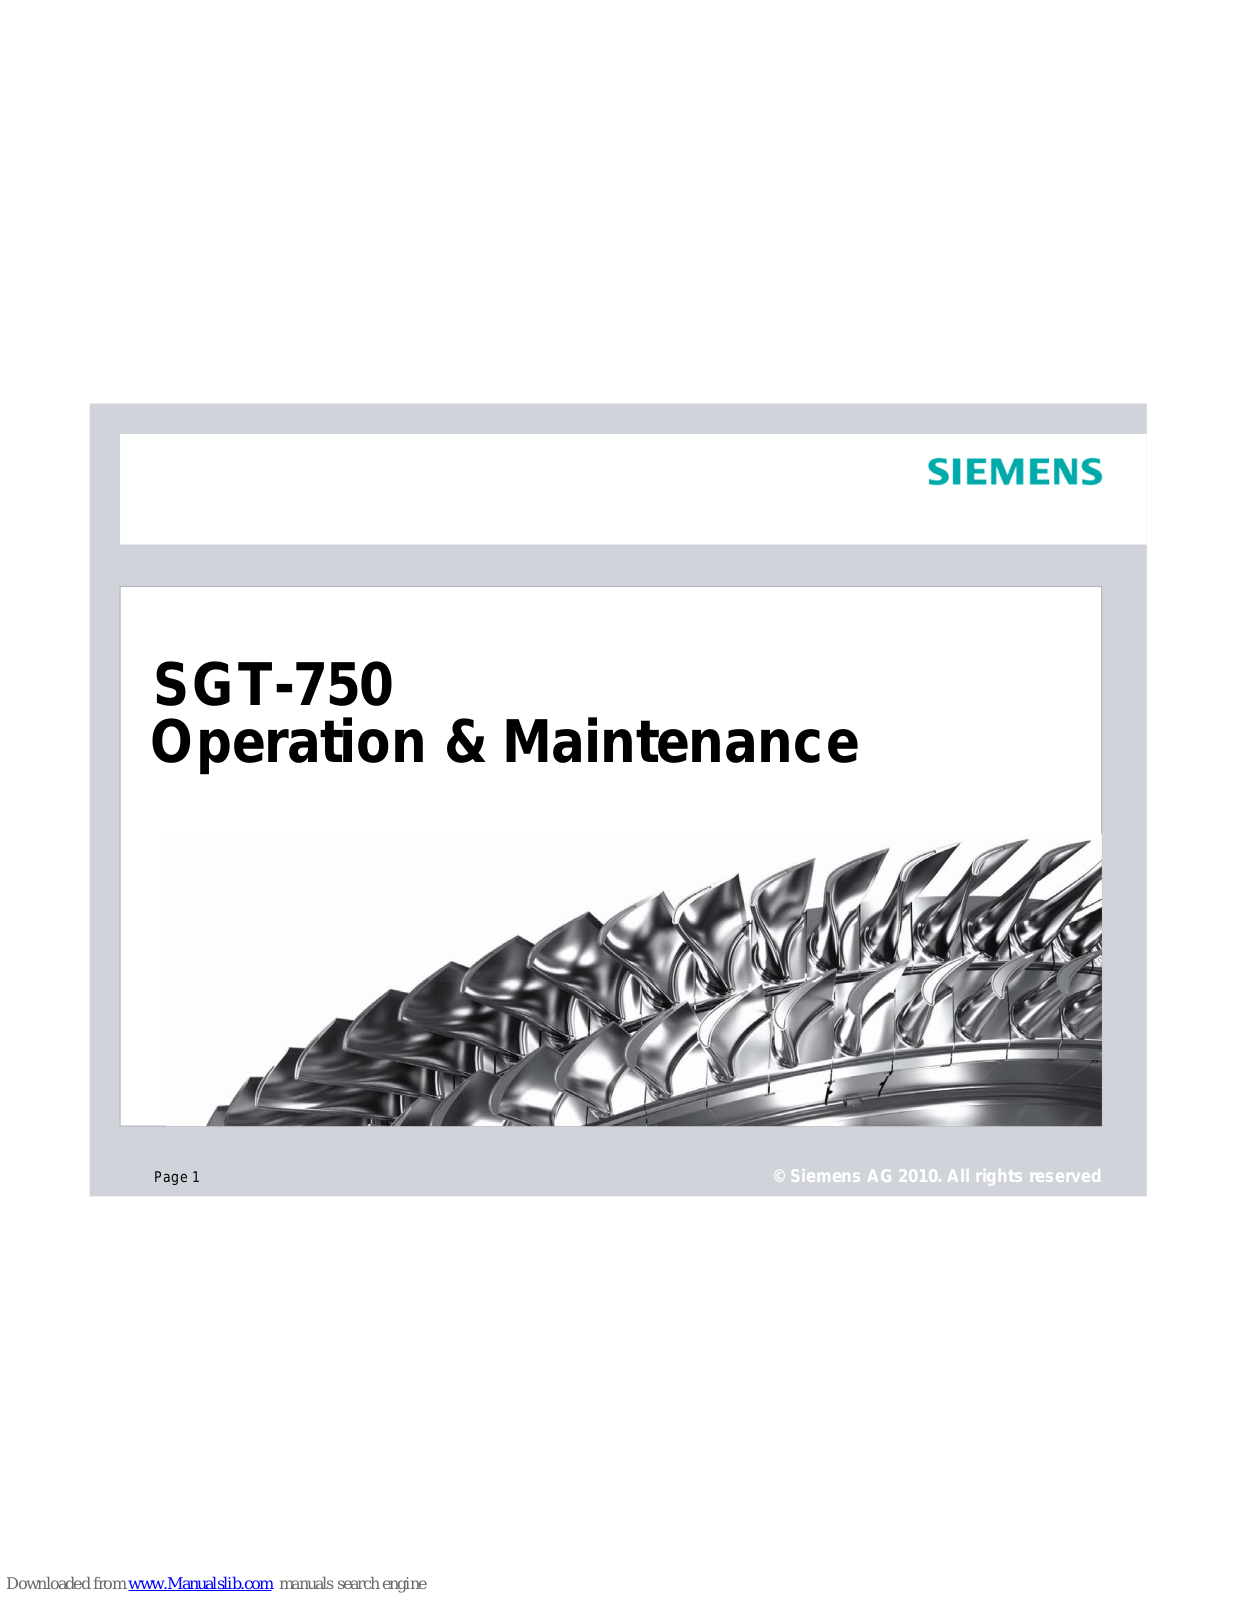 Siemens SGT-750 Operation & Maintenance Manual